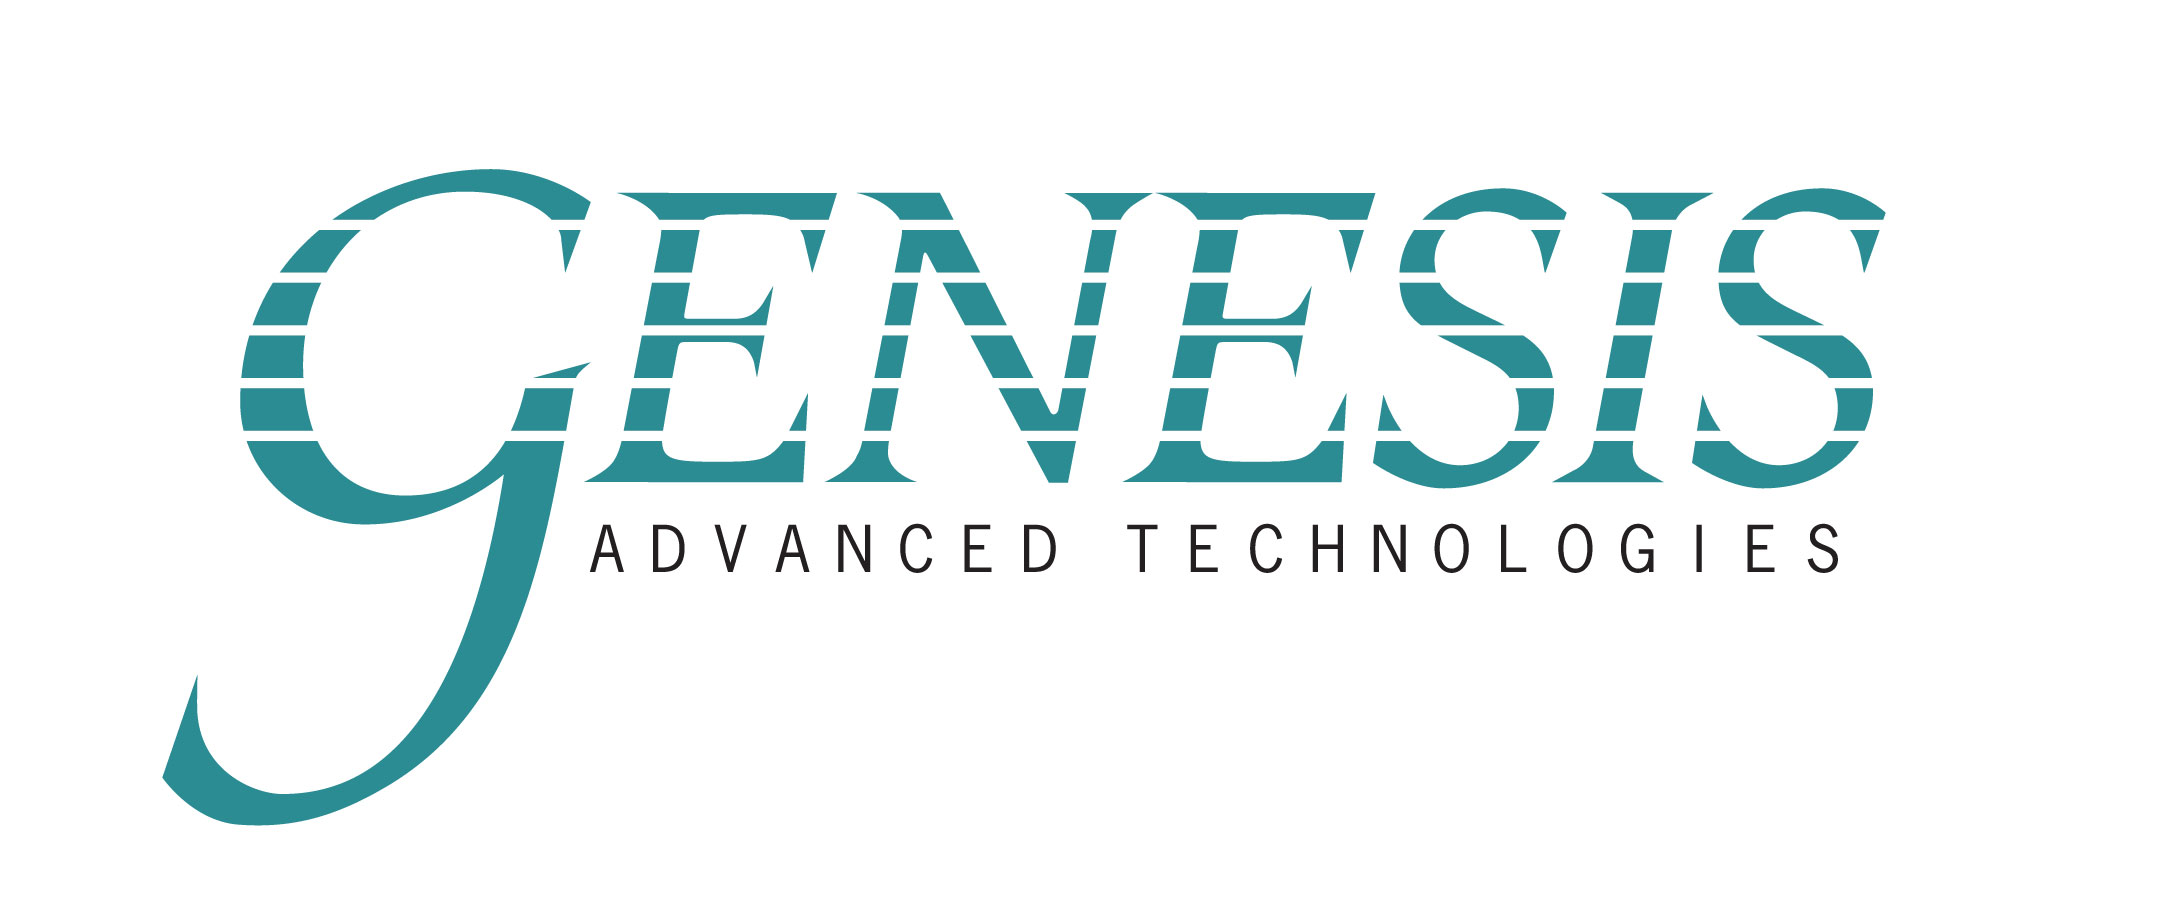 Genesis Advanced Technology